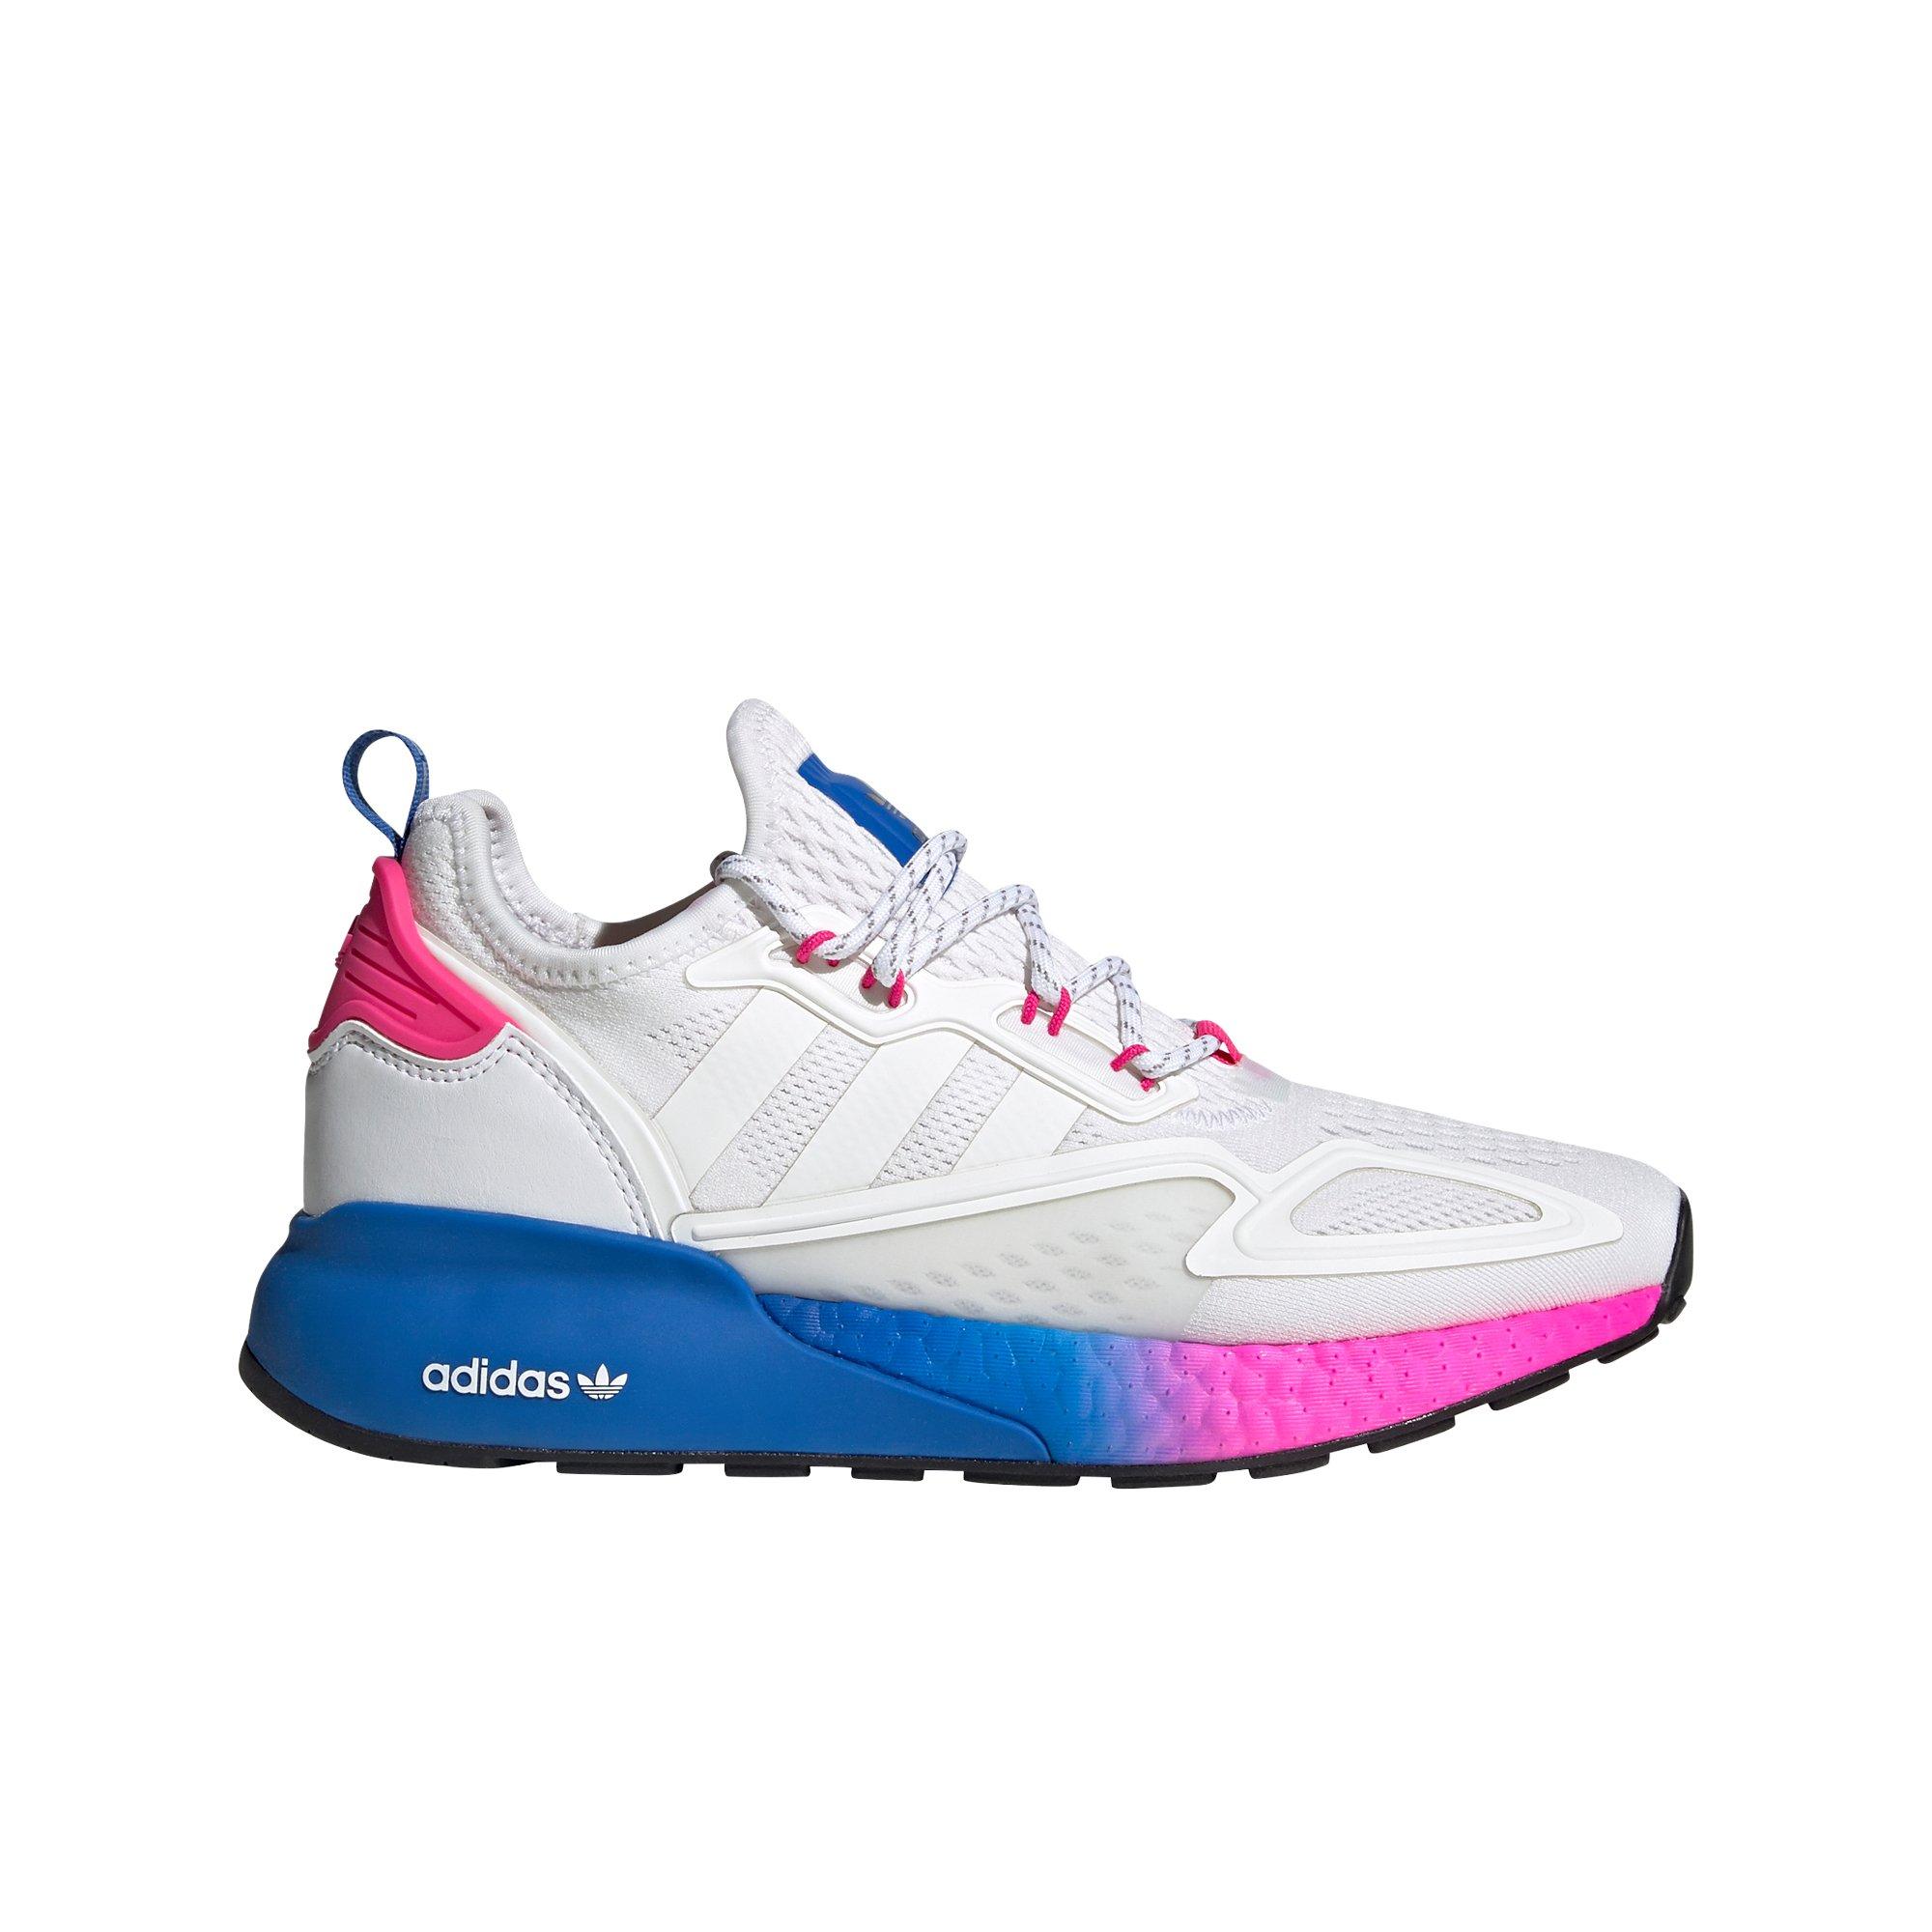 adidas shock pink shoes